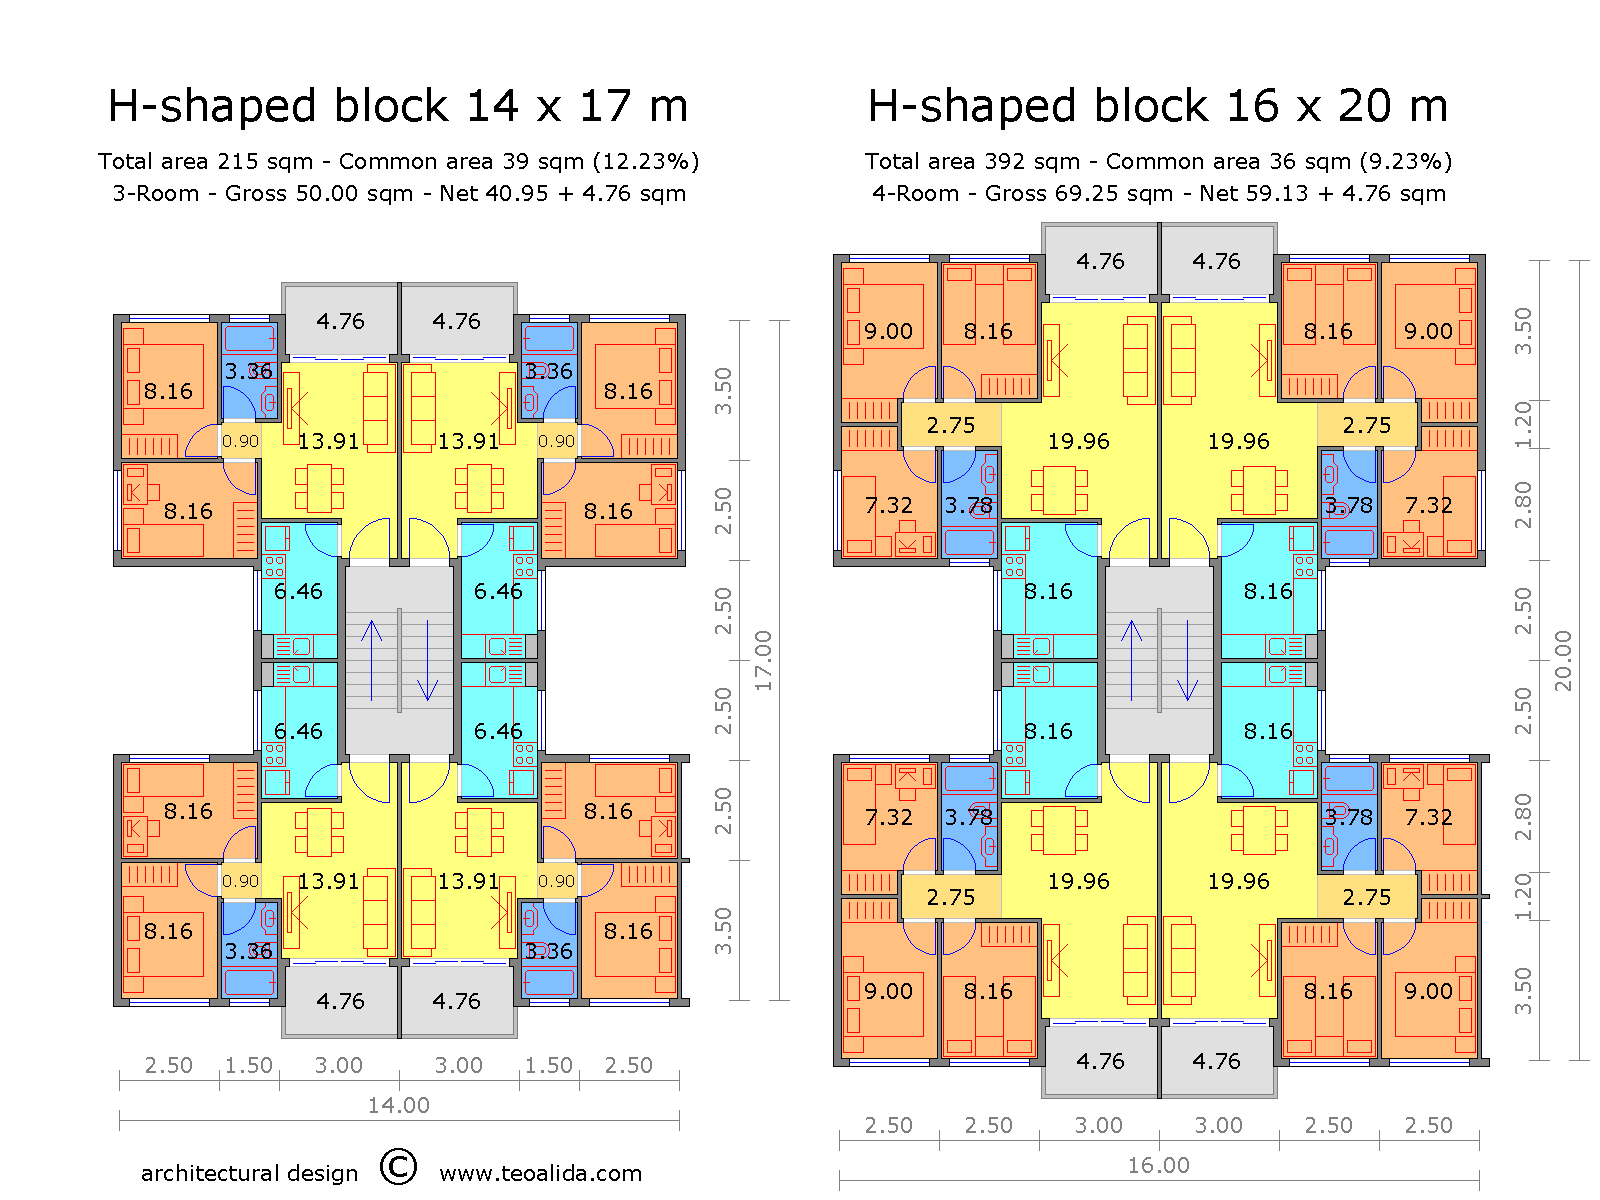 H-Shaped Split-Level block